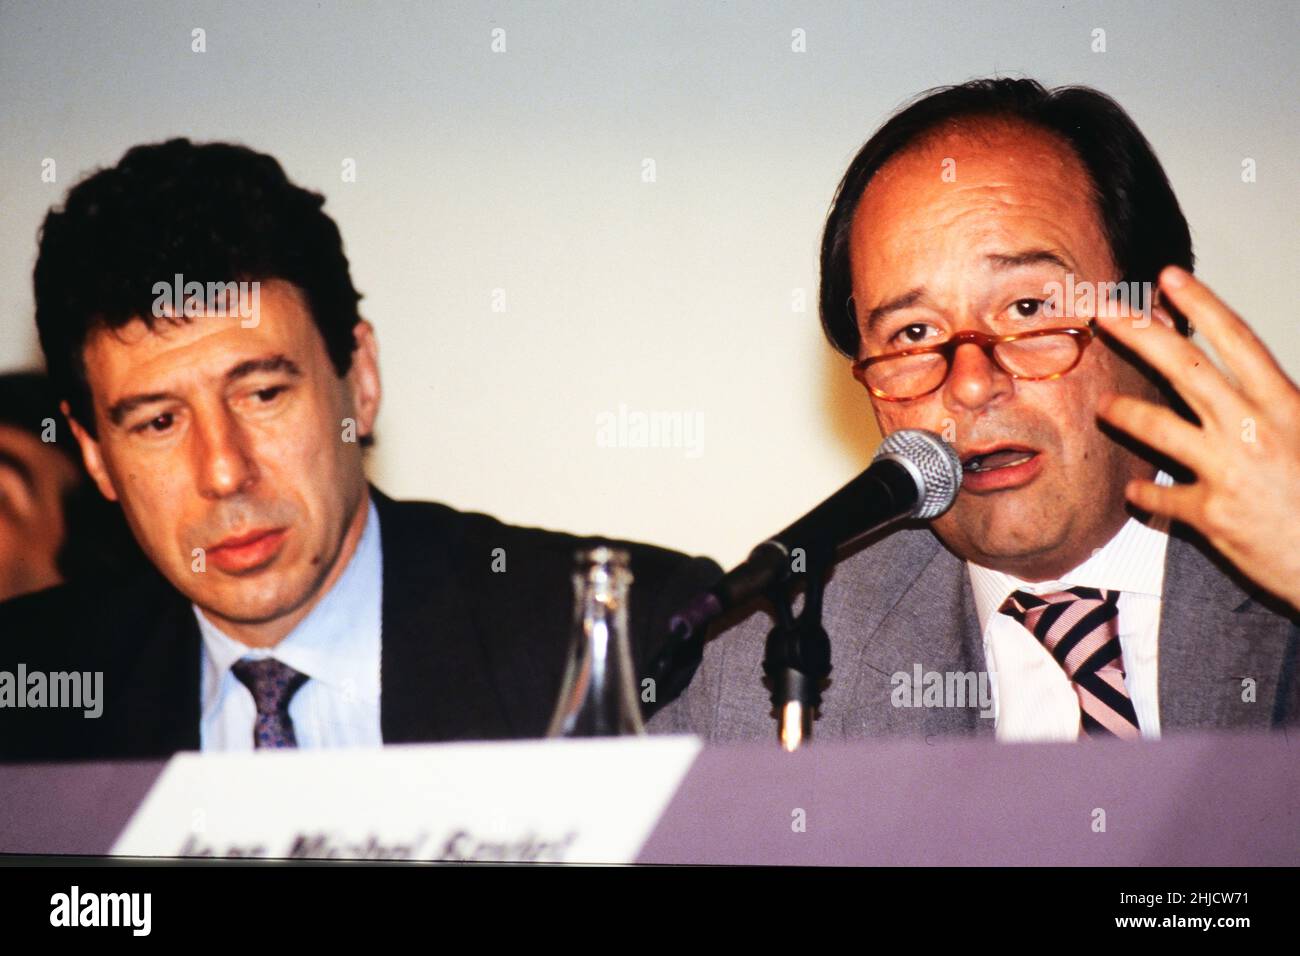 Archives 90ies: Emile Zuccarelli and Jean-Michel Baylet attend National  Congress of MRG (Mouvement des Radicaux de gauche), Lyon, France, 1992  Stock Photo - Alamy